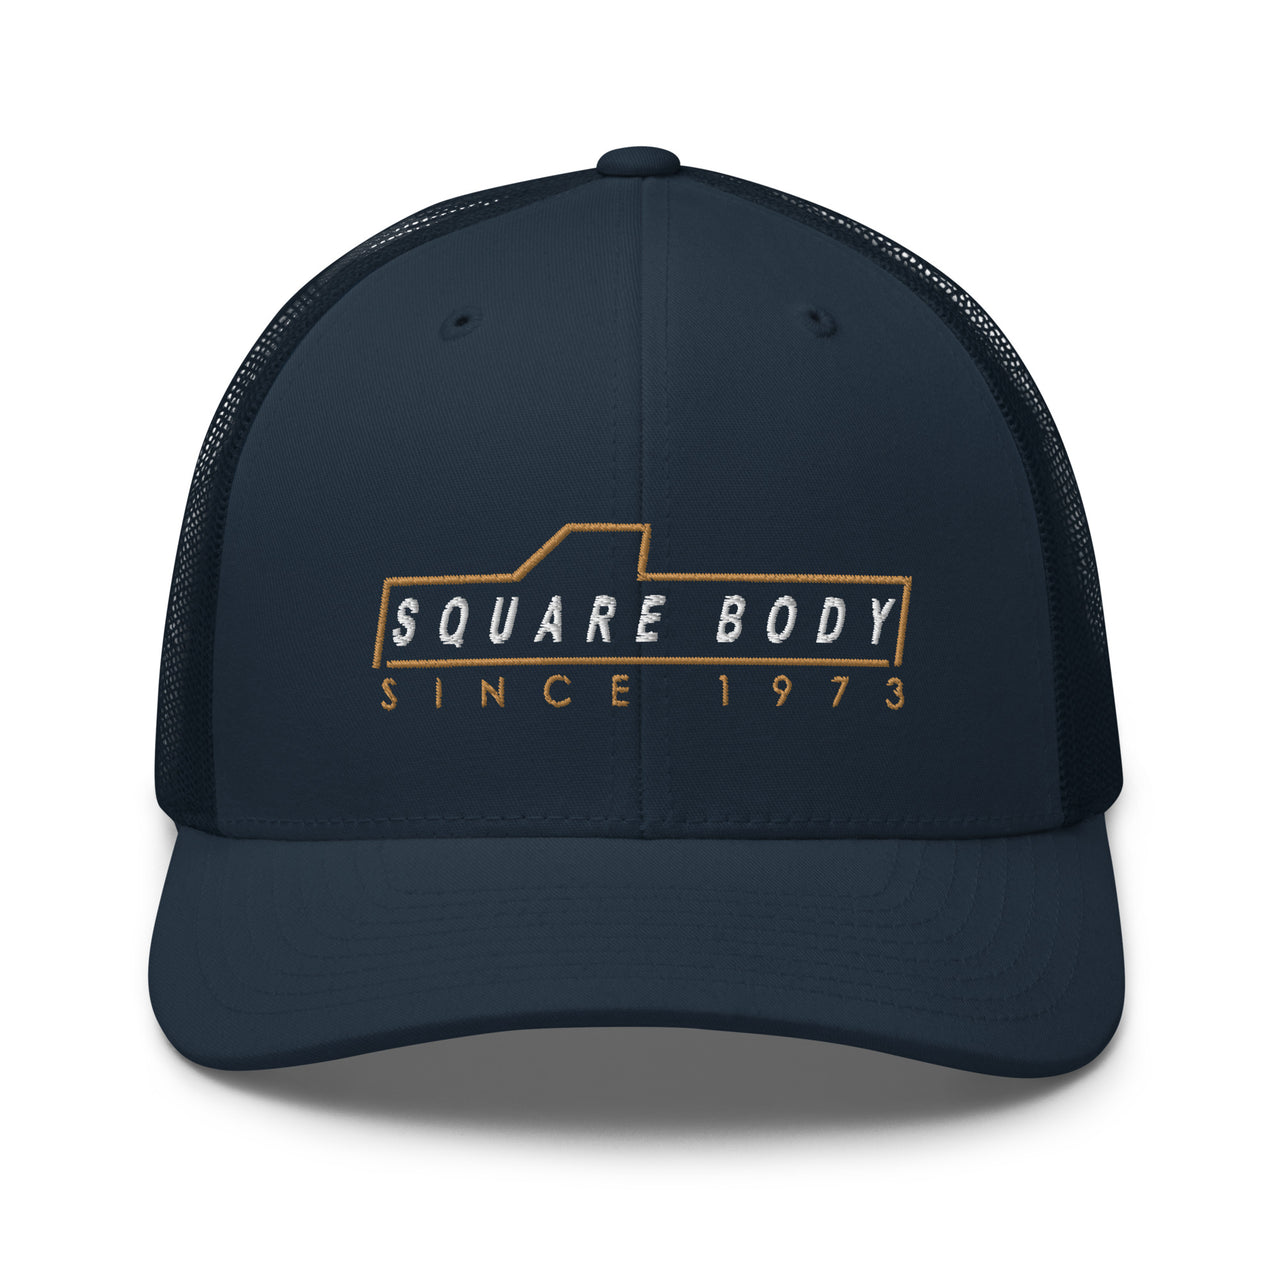 3/4 view of square body trucker hat in navy - Aggressive Thread Auto Apparel